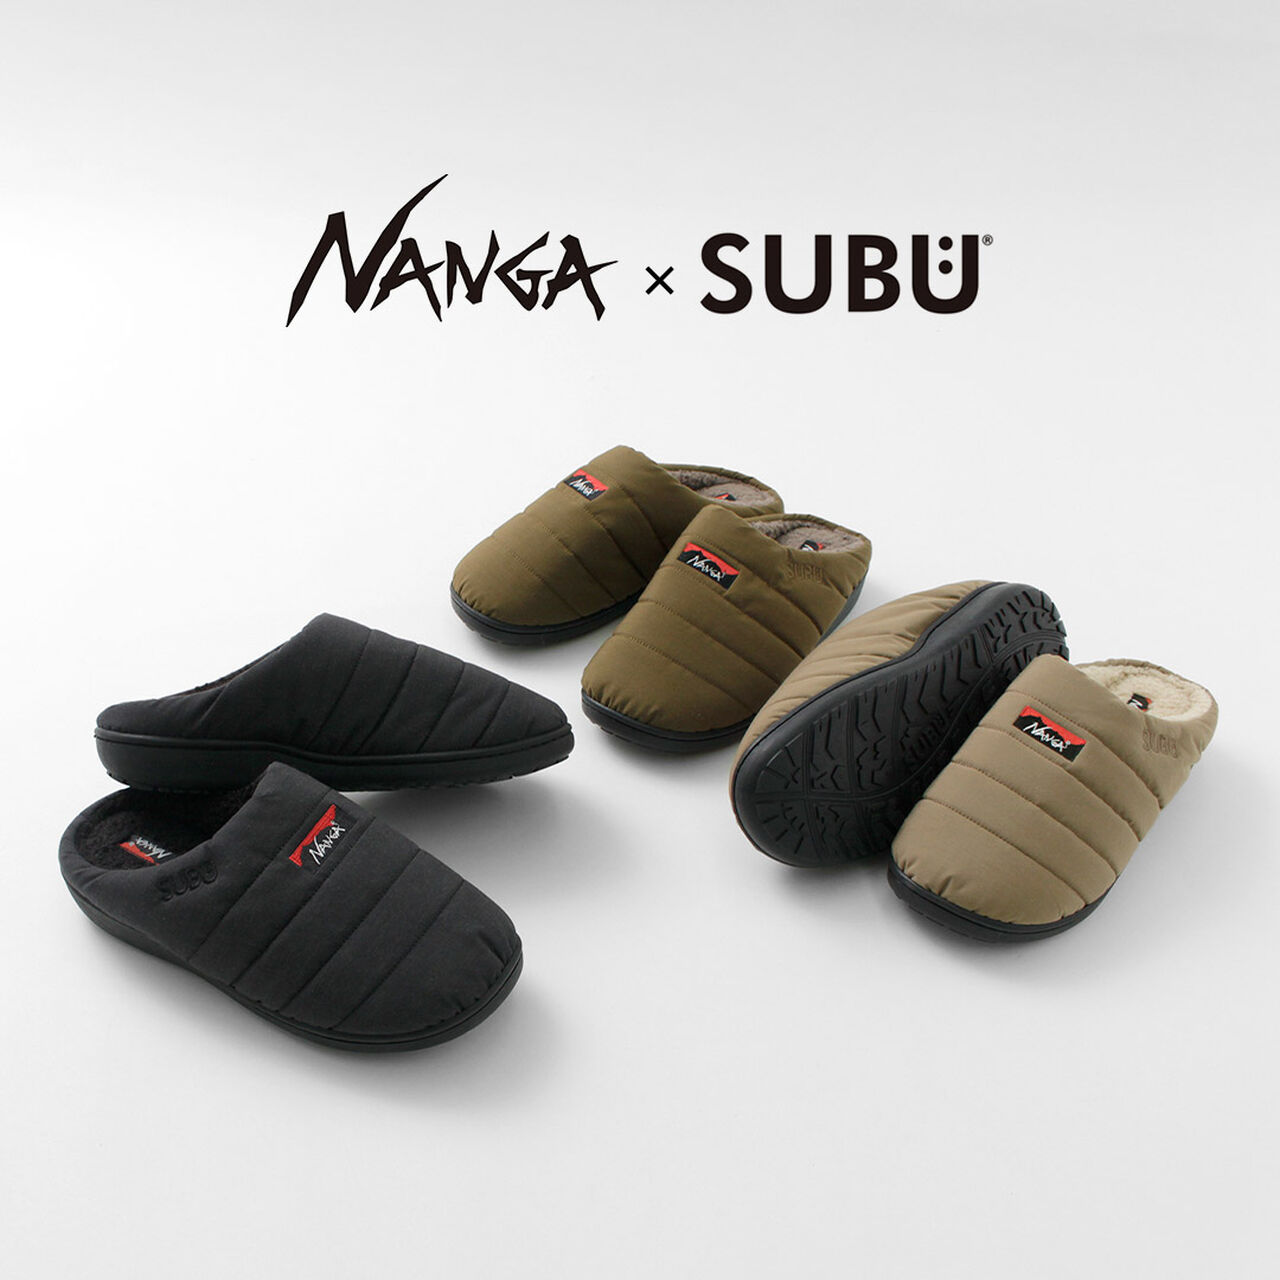 NANGA x SUBU Fire-resistant Winter Sandals,, large image number 6